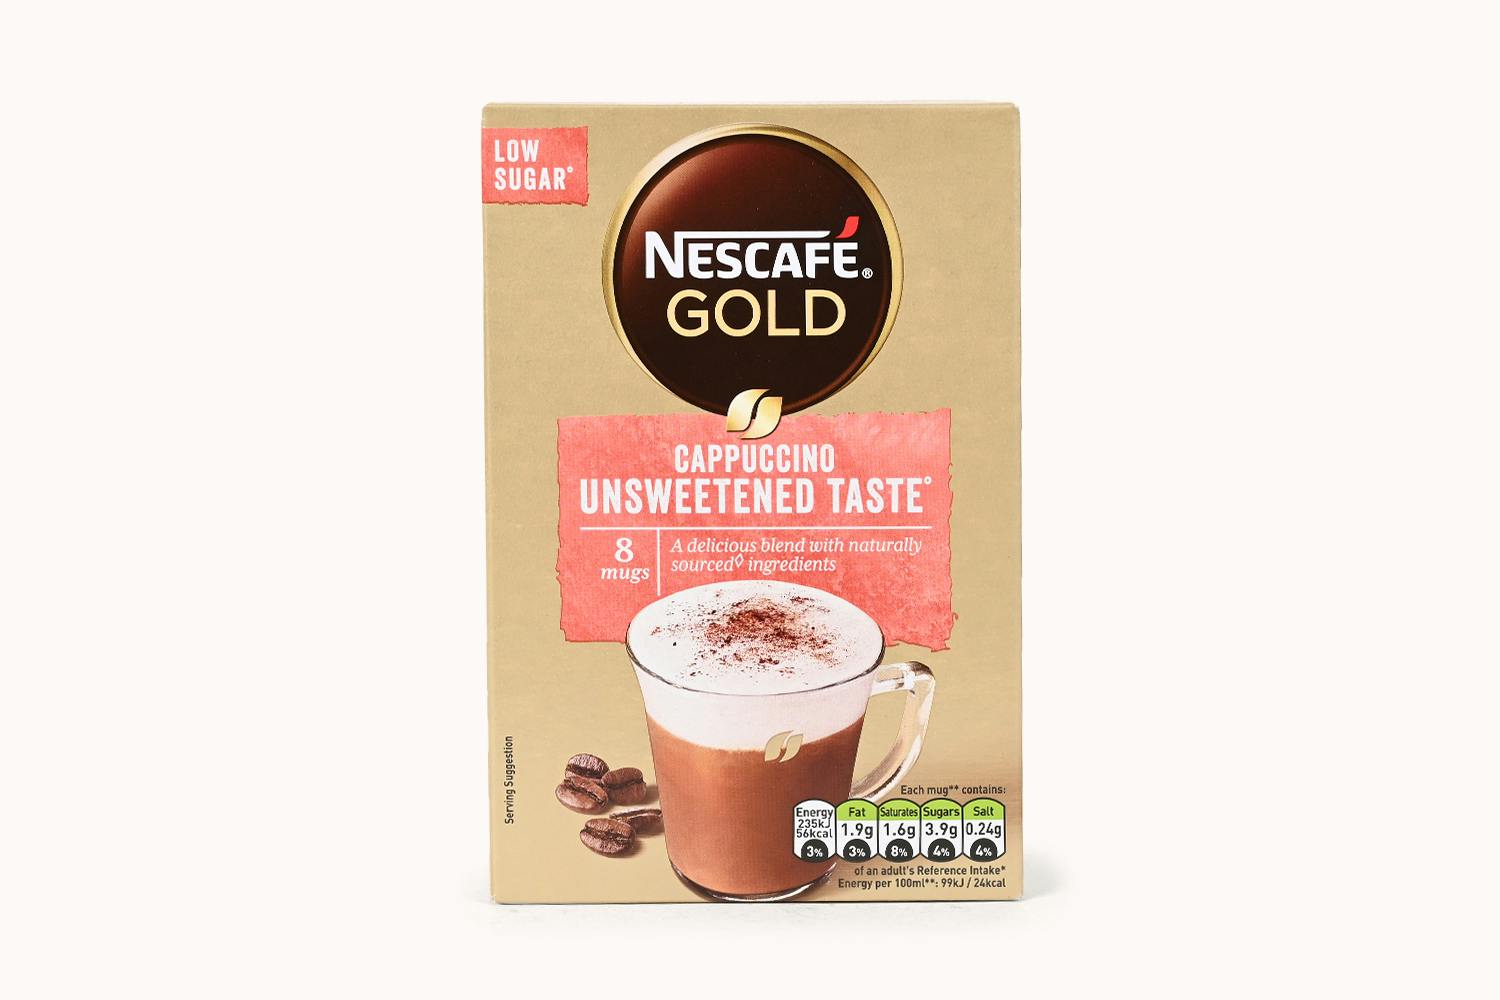 Nescafe Gold Cappuccino - Unsweetened